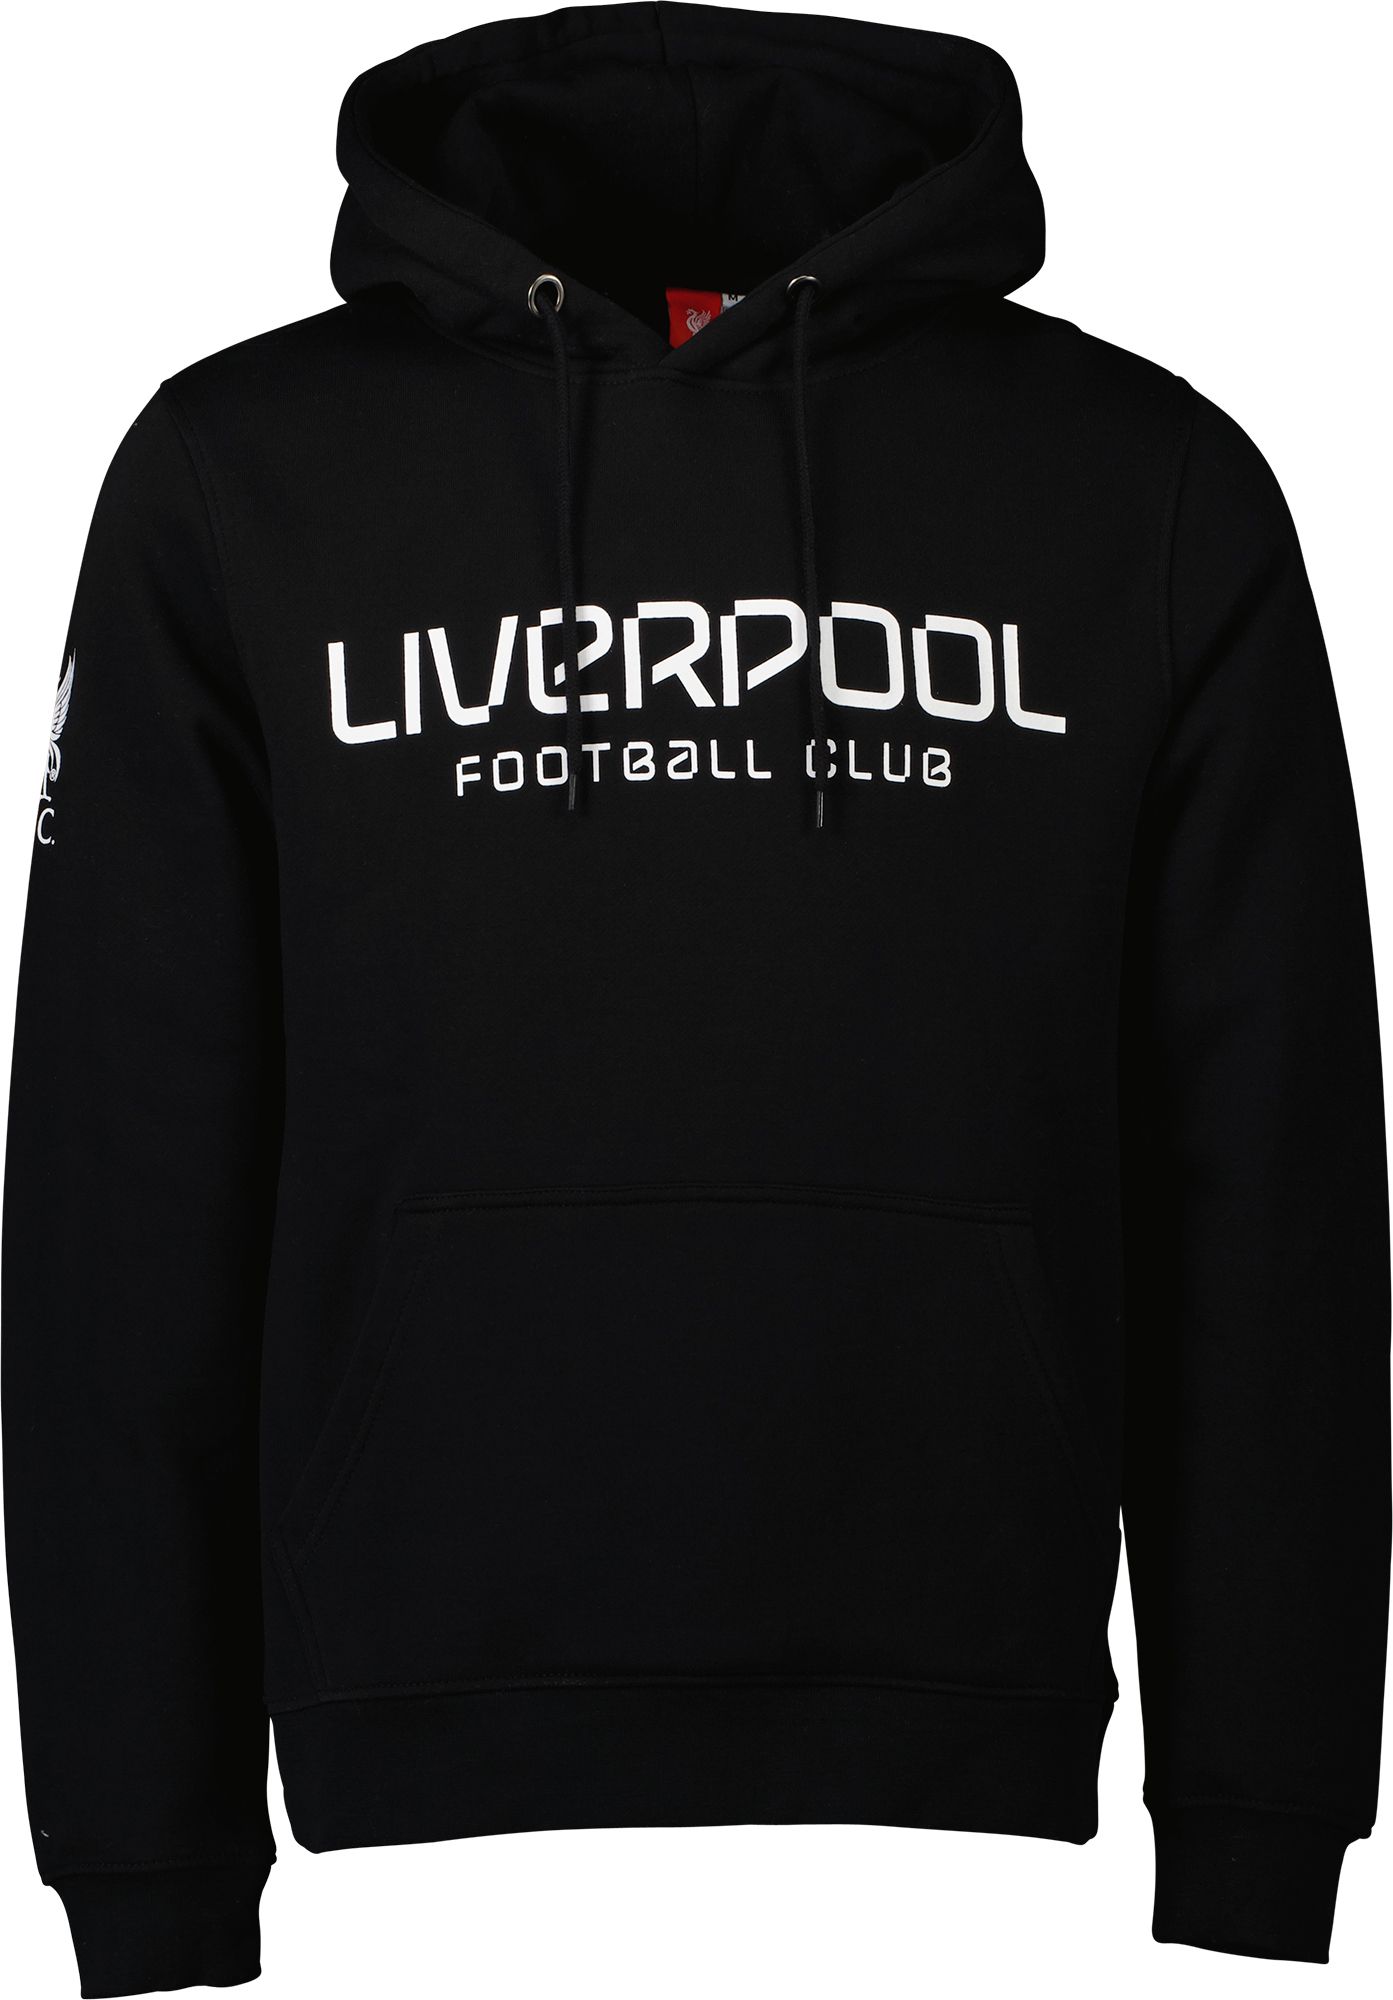 liverpool football club hoodies